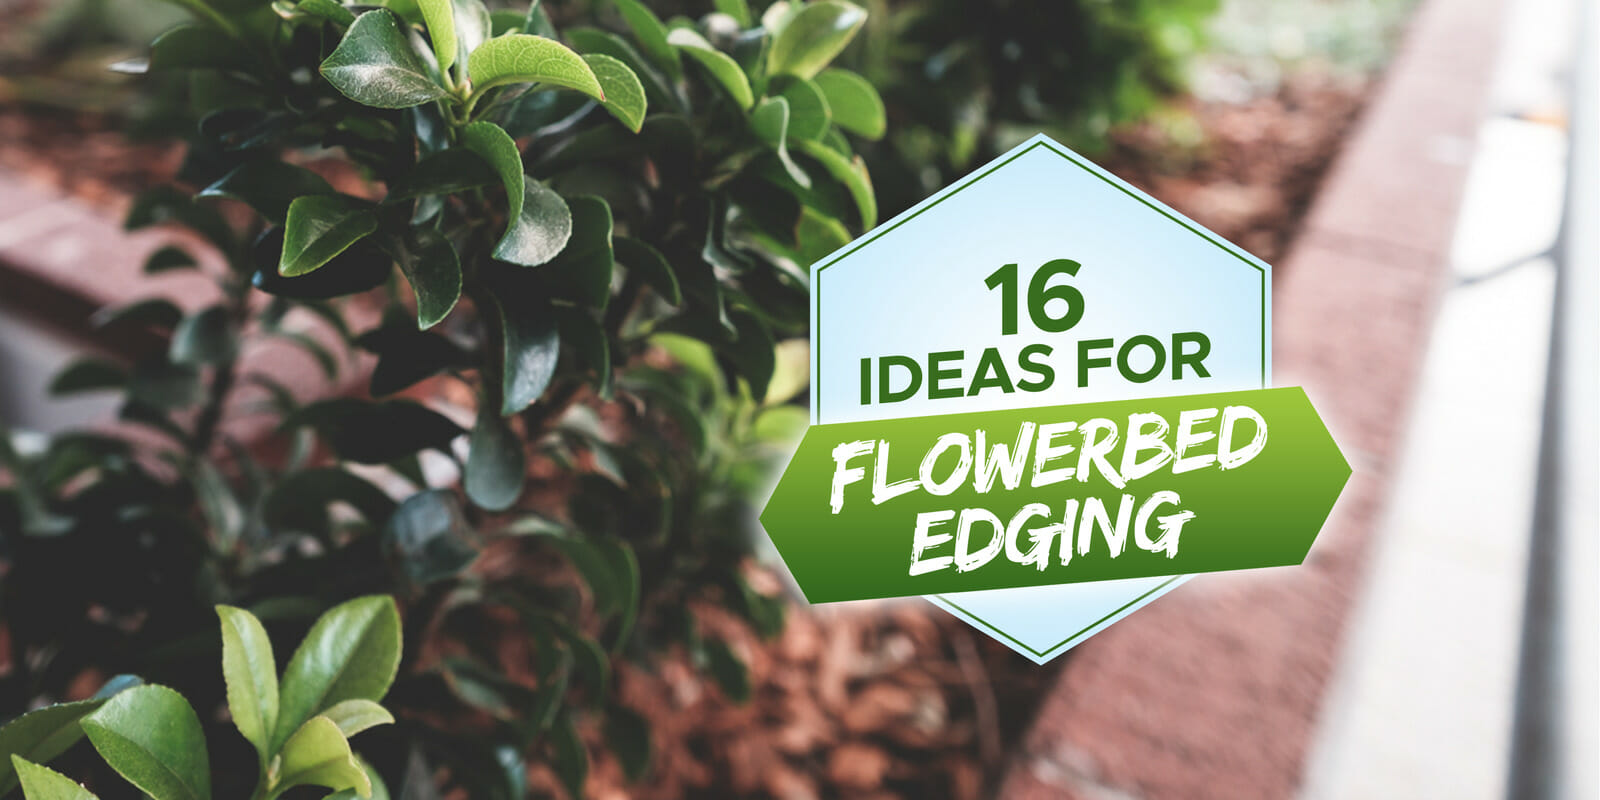 flowerbed edging ideas